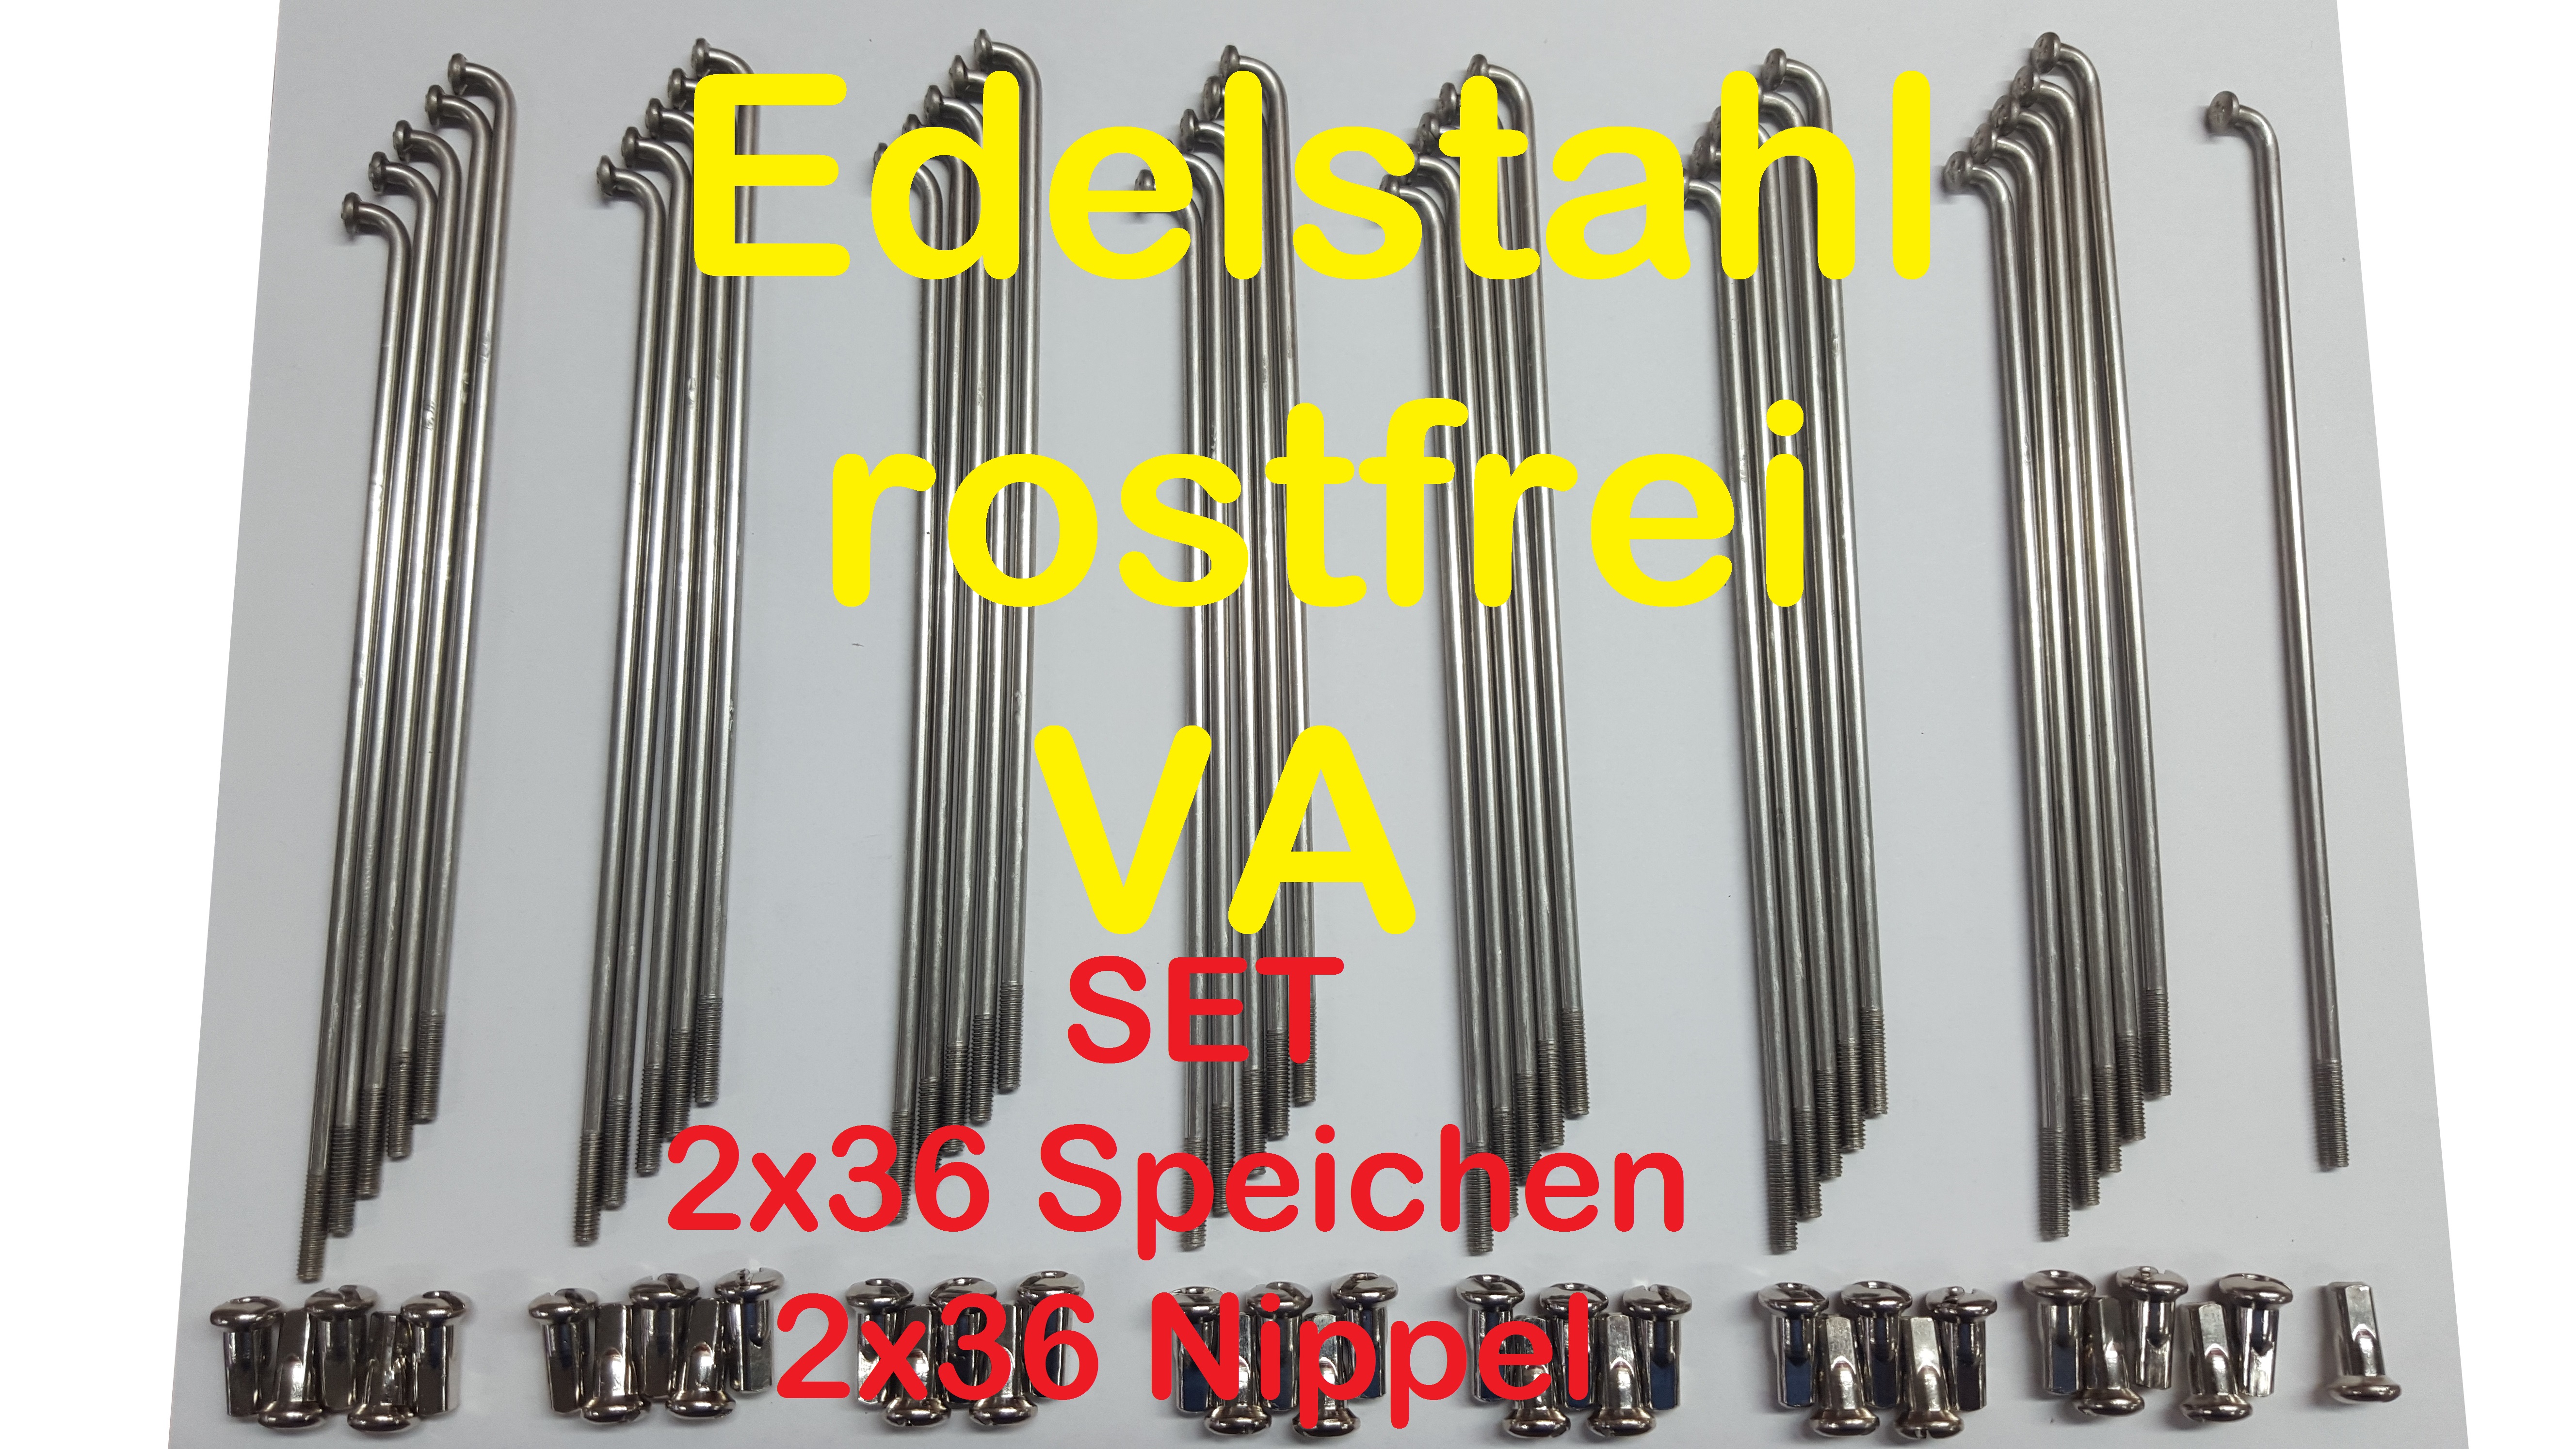 SET Speichensatz m. Nippel 143,5 mm 2x36 Stück Edelstahl S51